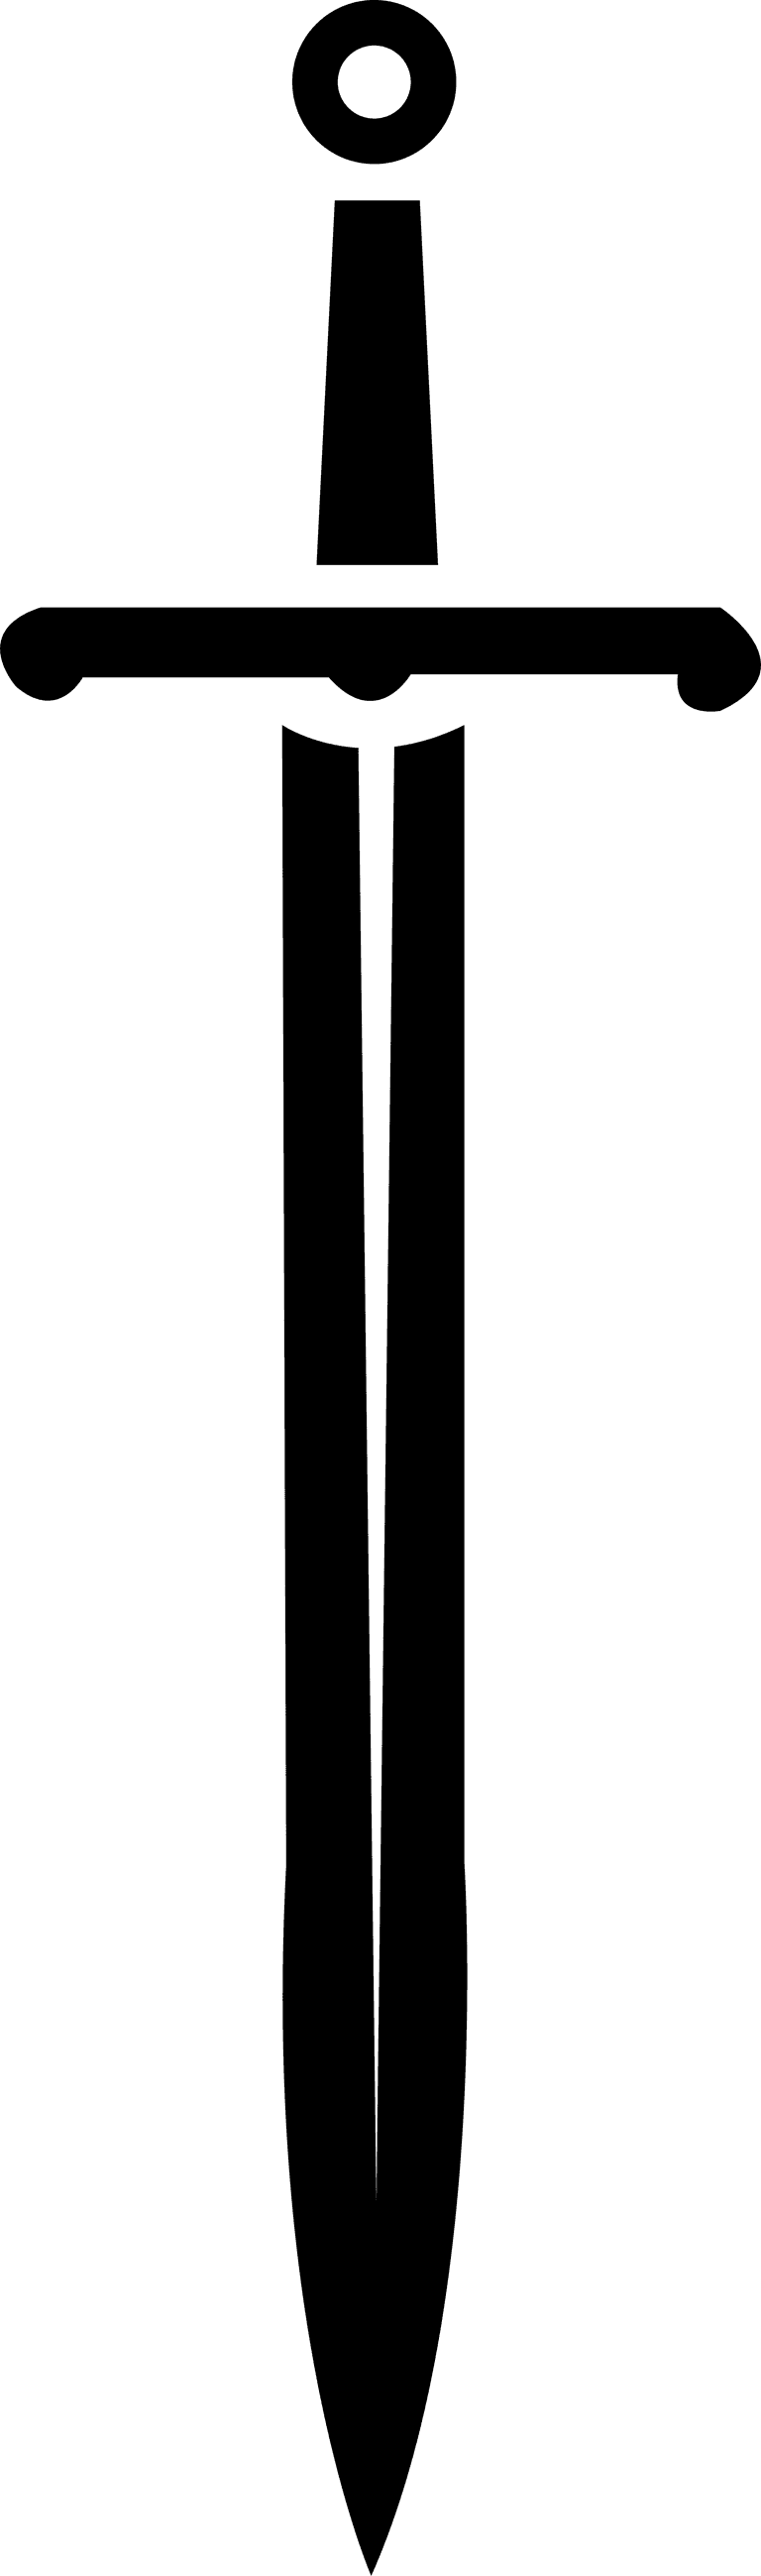 isolated sword symbols, sword silhouette 